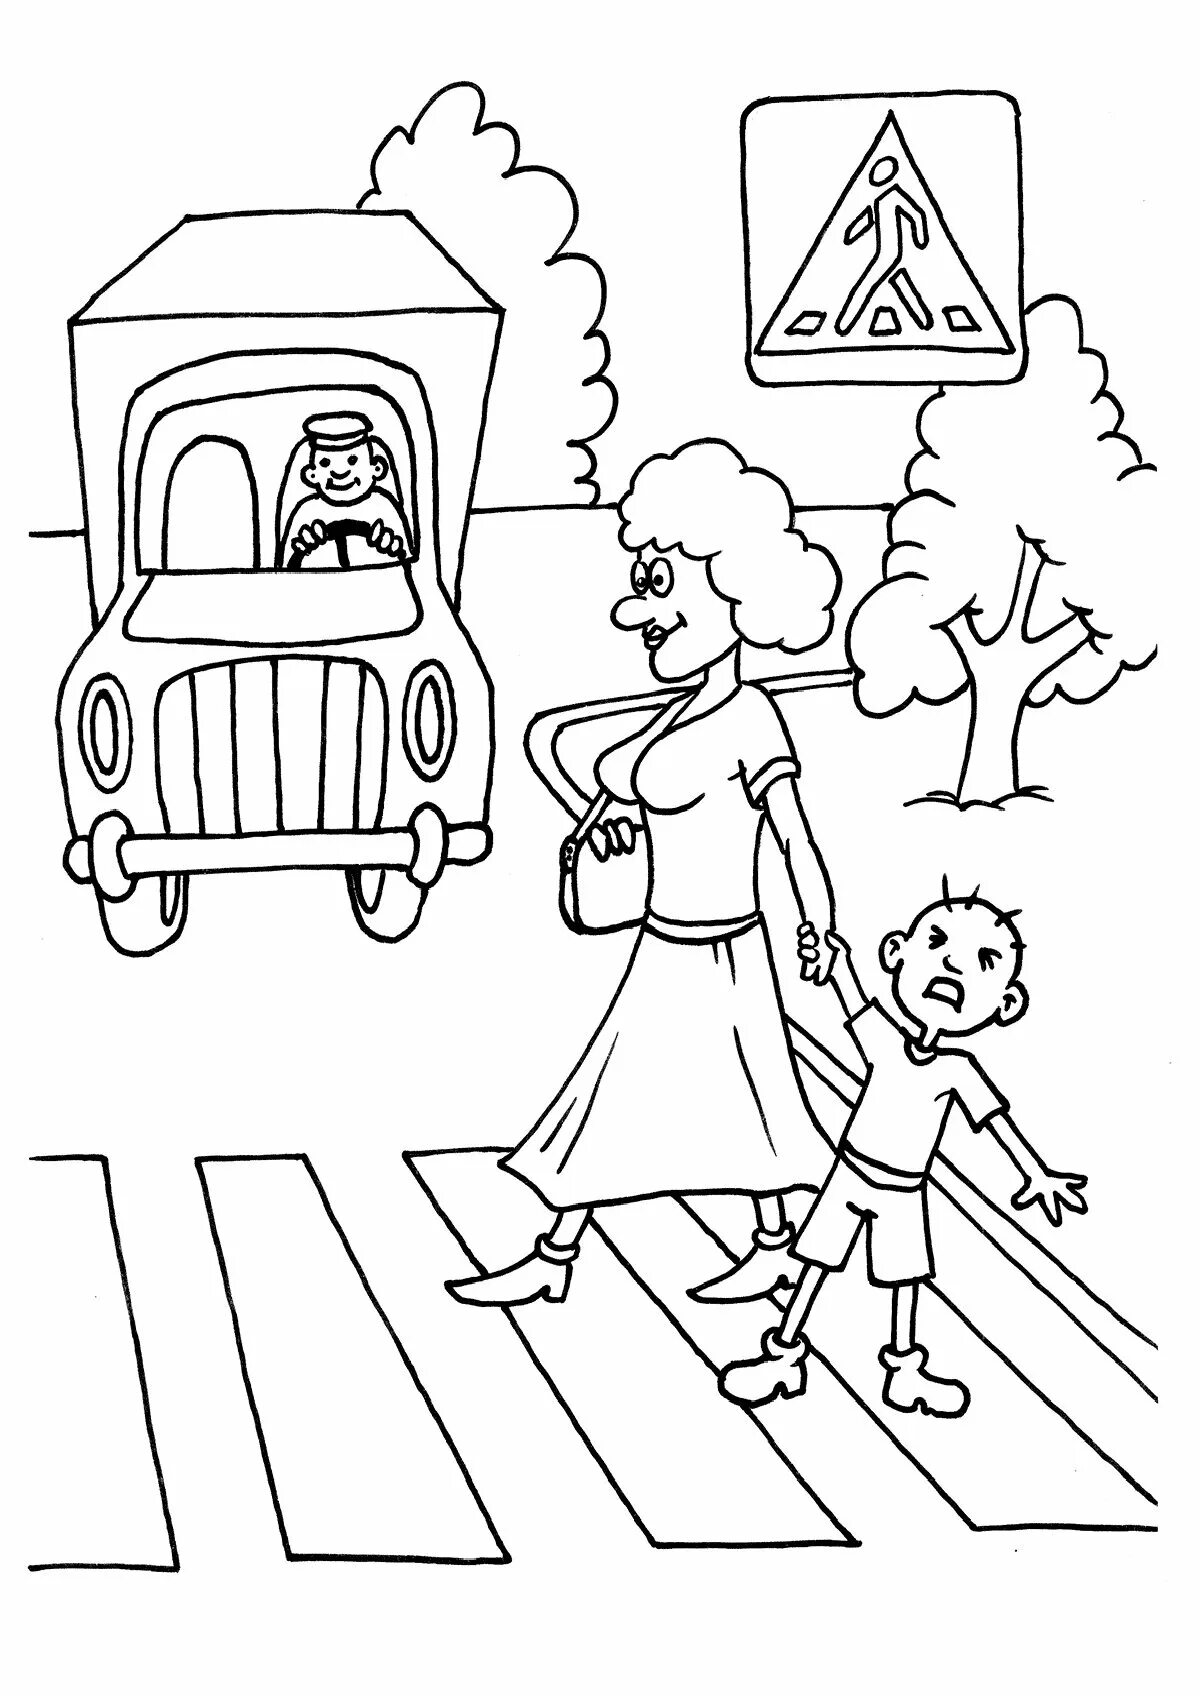 Road safety for children #9